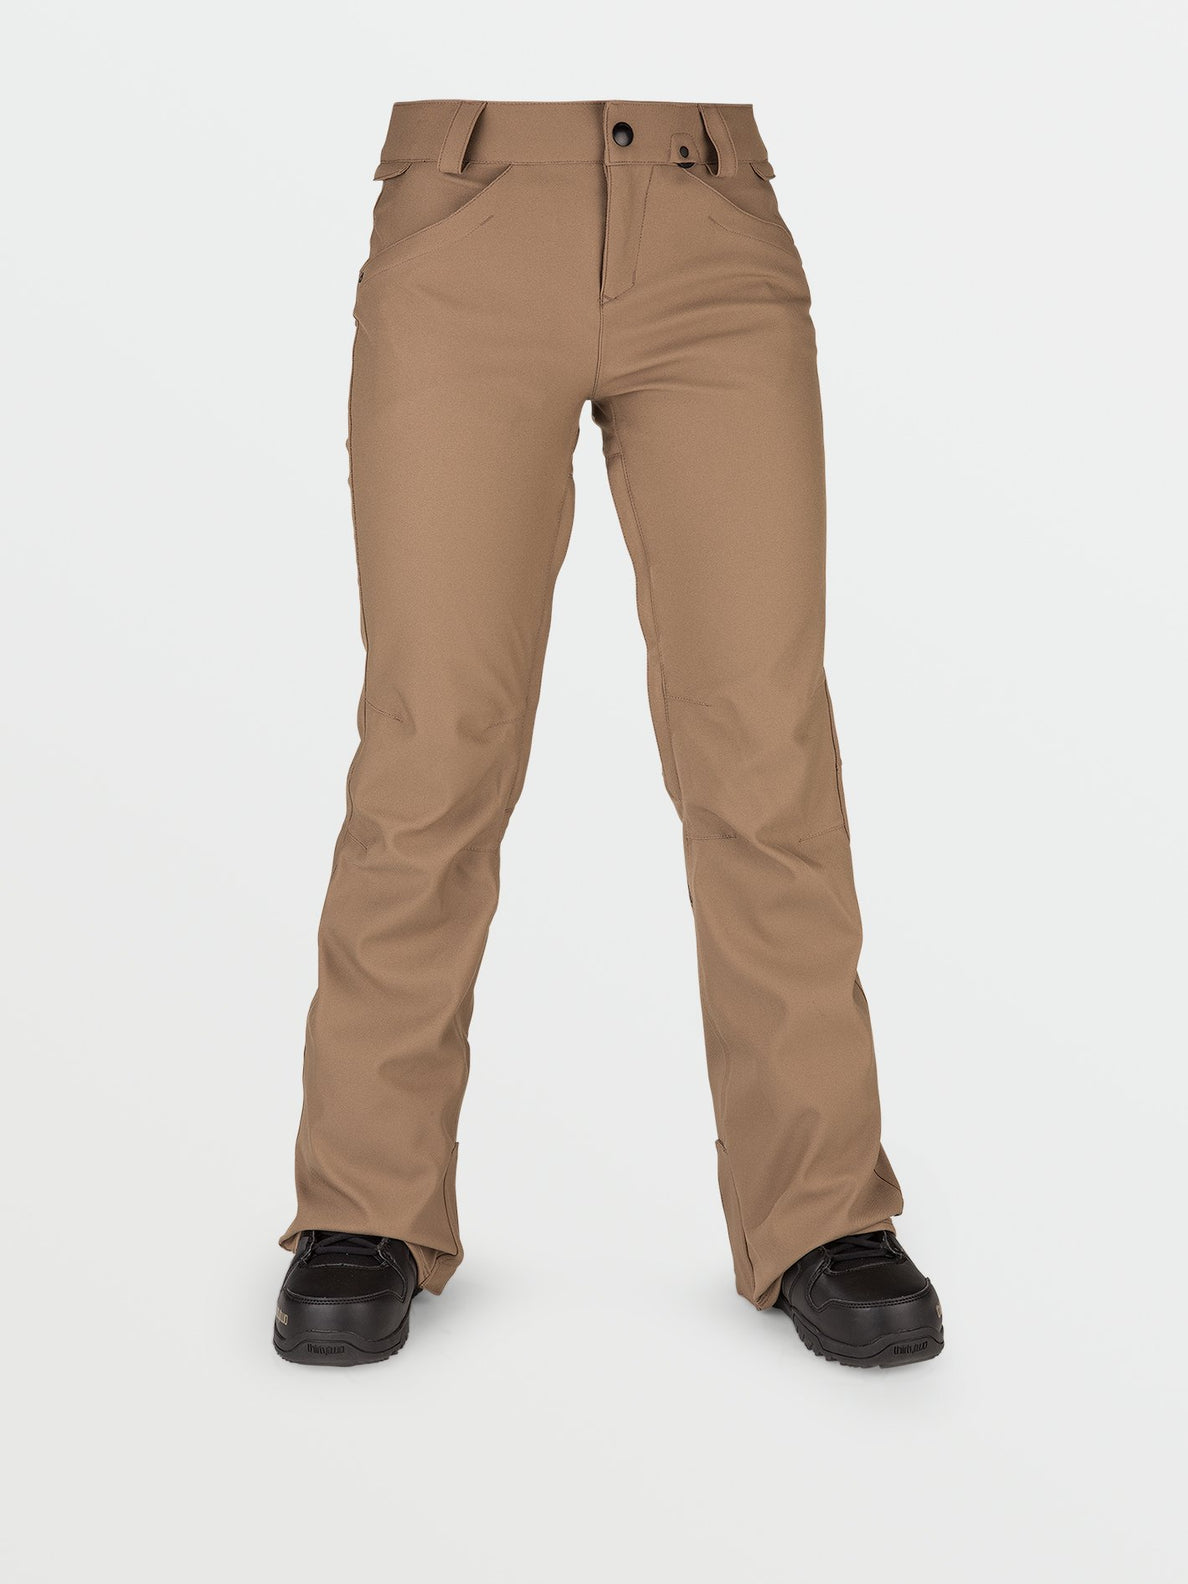 Species Stretch Trousers - COFFEE (H1351905_COF) [F]